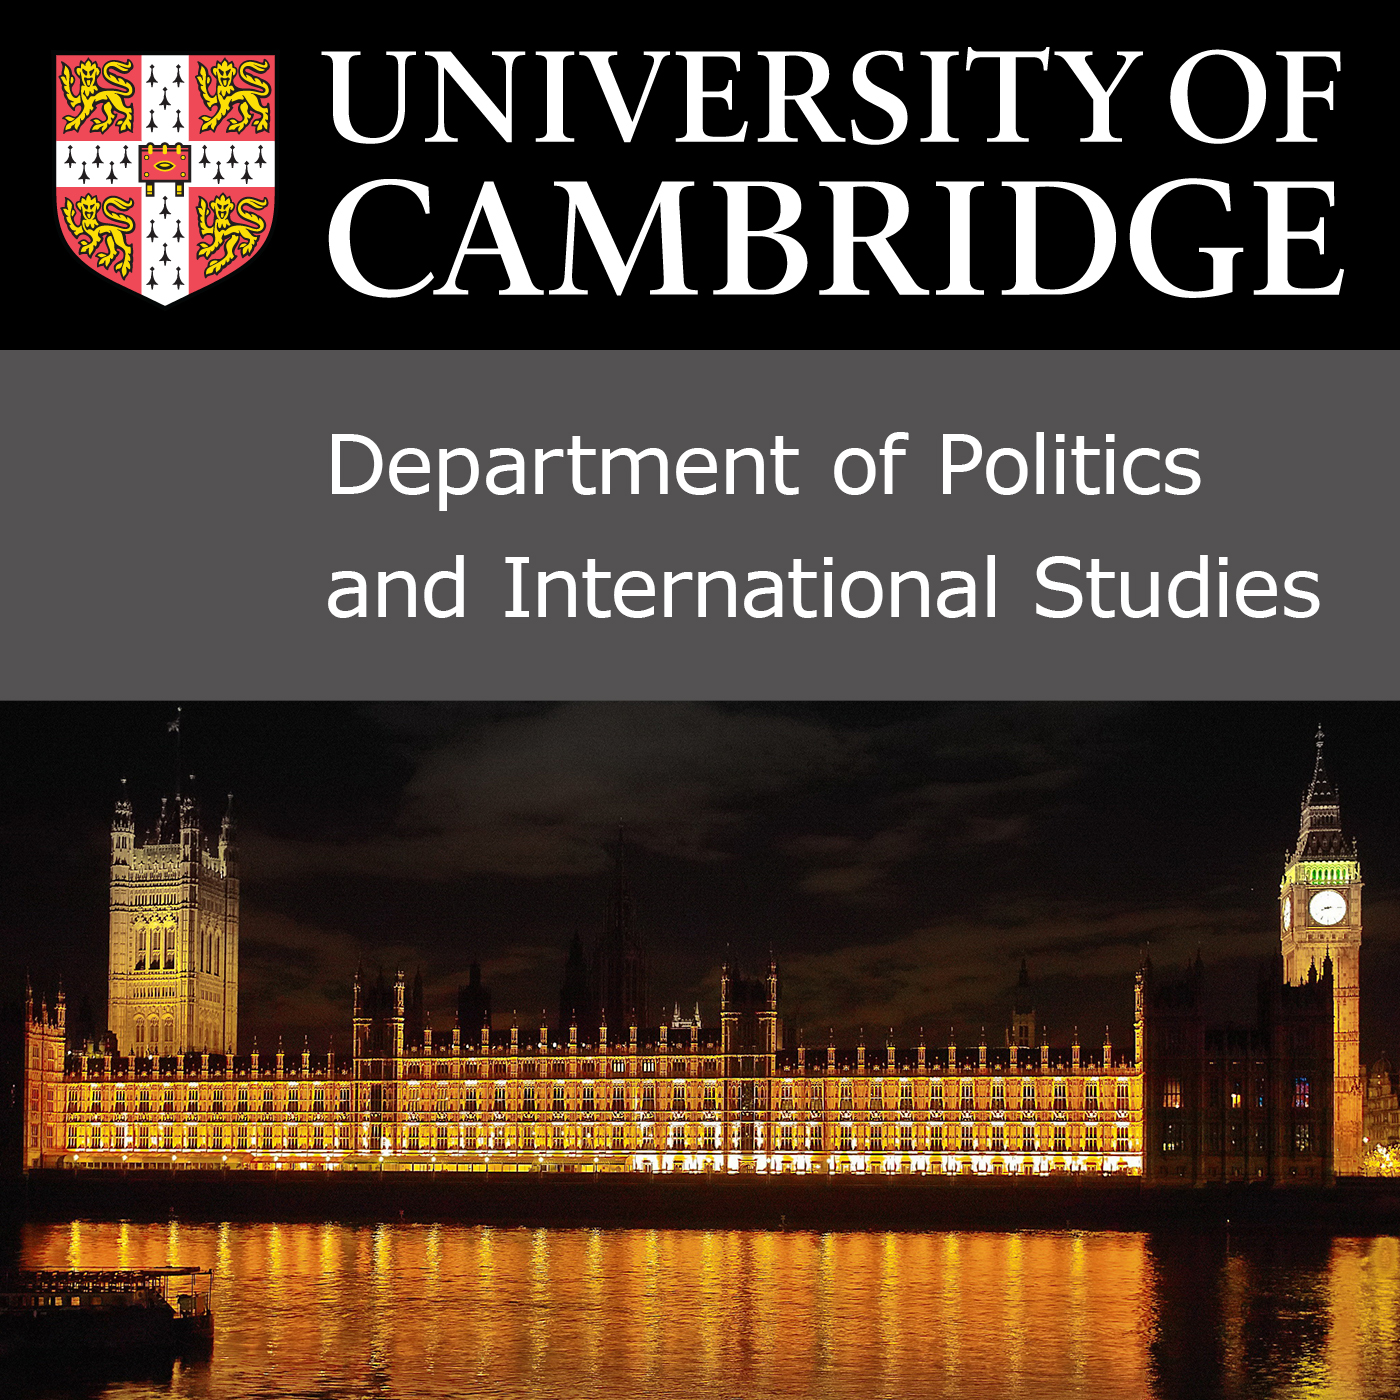 Department of Politics and International Studies's image